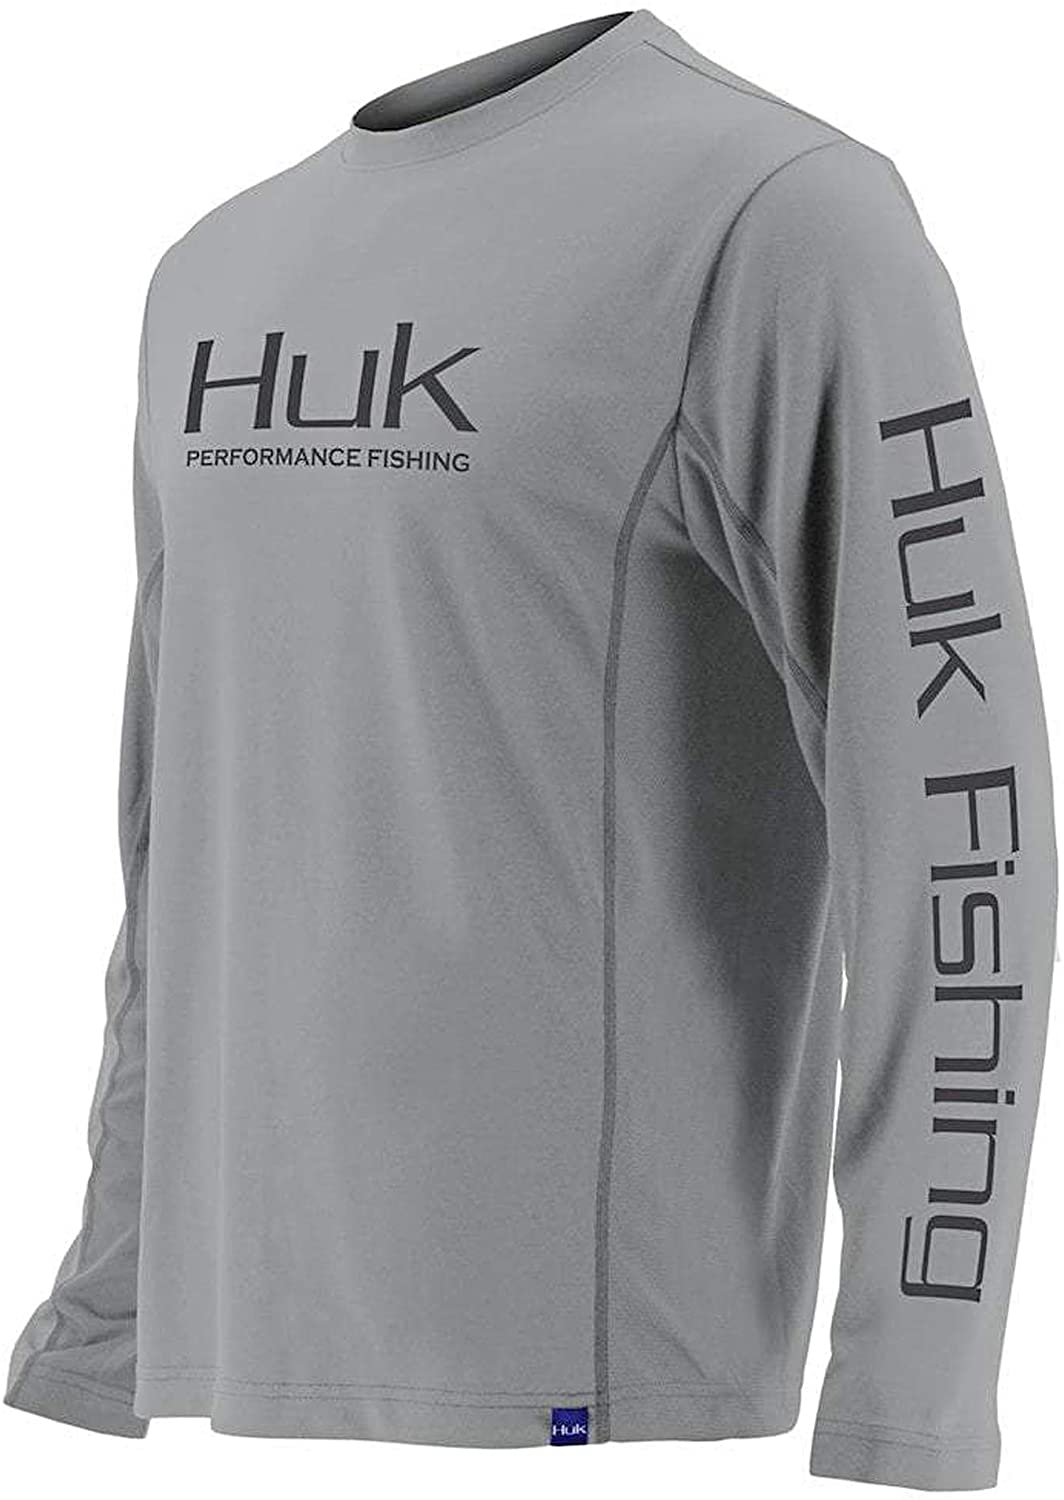 Huk Performance Fishing Men's Long Sleeve Pocket Tee Shirt